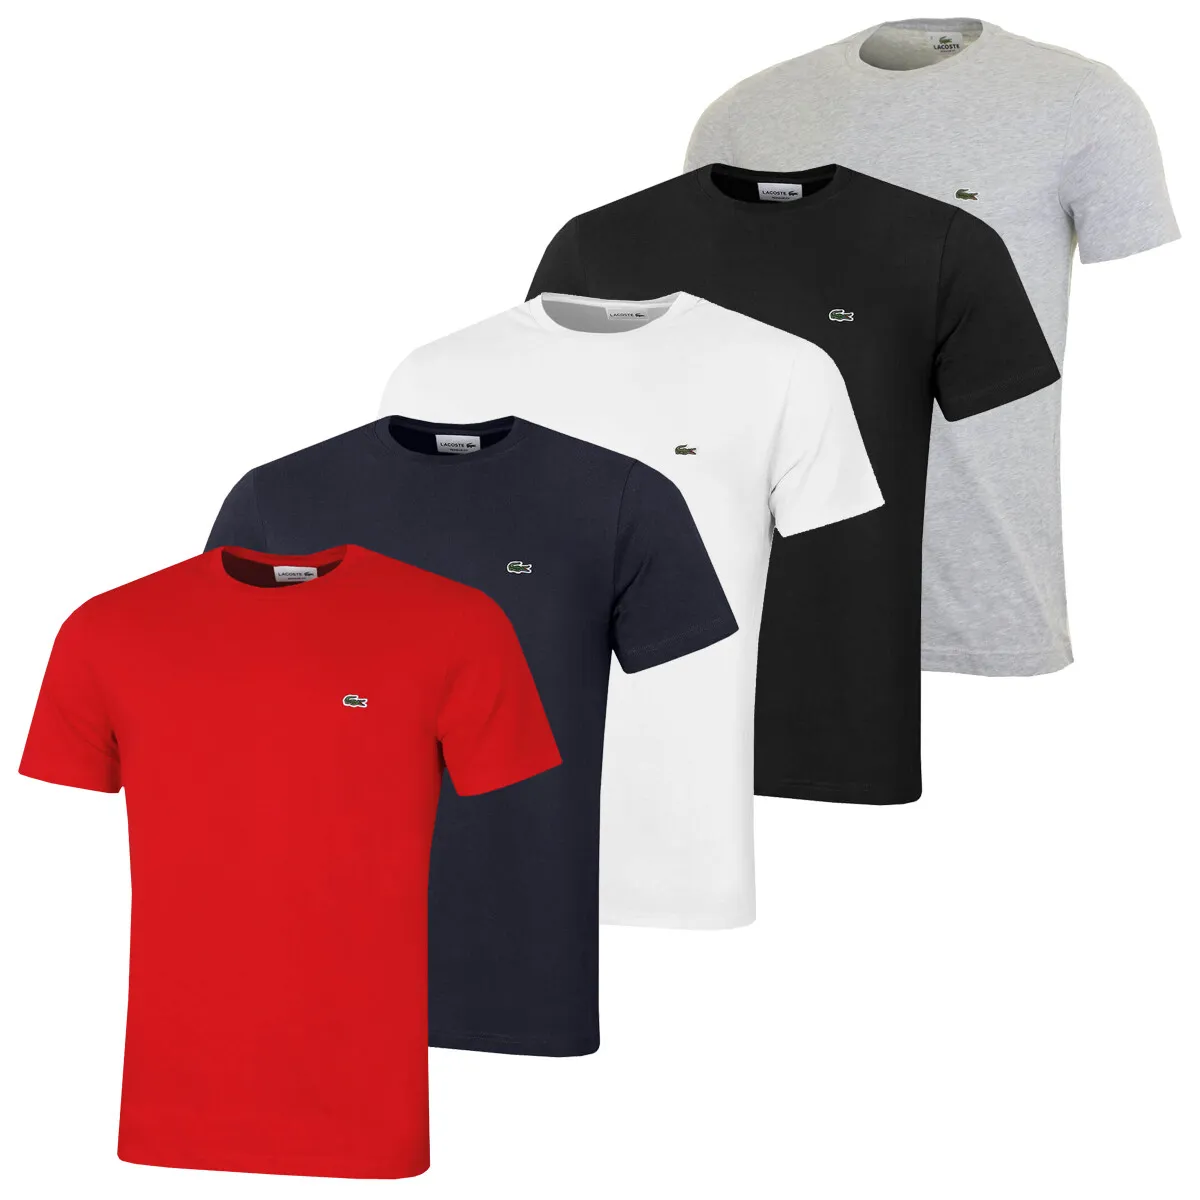 Lacoste Mens TH2038 Plain Cotton Crew Short Sleeve T-Shirt 25% OFF